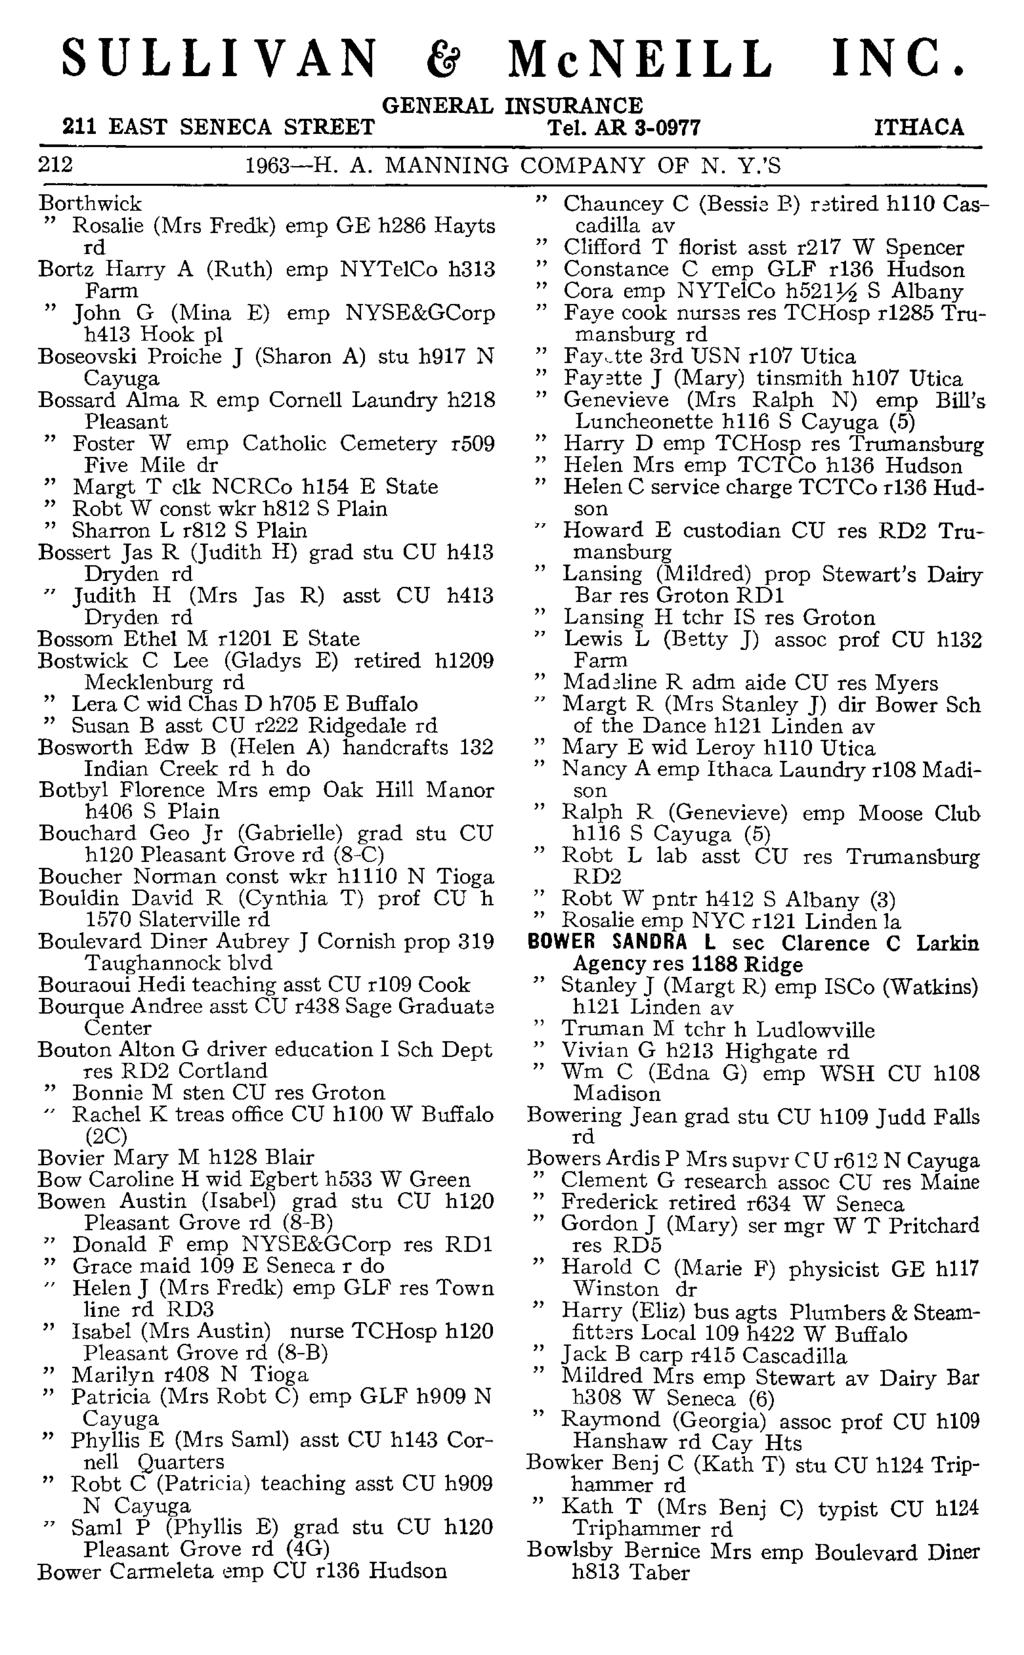 SULLIVAN McNEILL INC. GENERAL INSURANCE 211 EAST SENECA STREET Tel. AR 3-0977 212 1963-H. A. MANNING COMPANY OF N. Y.